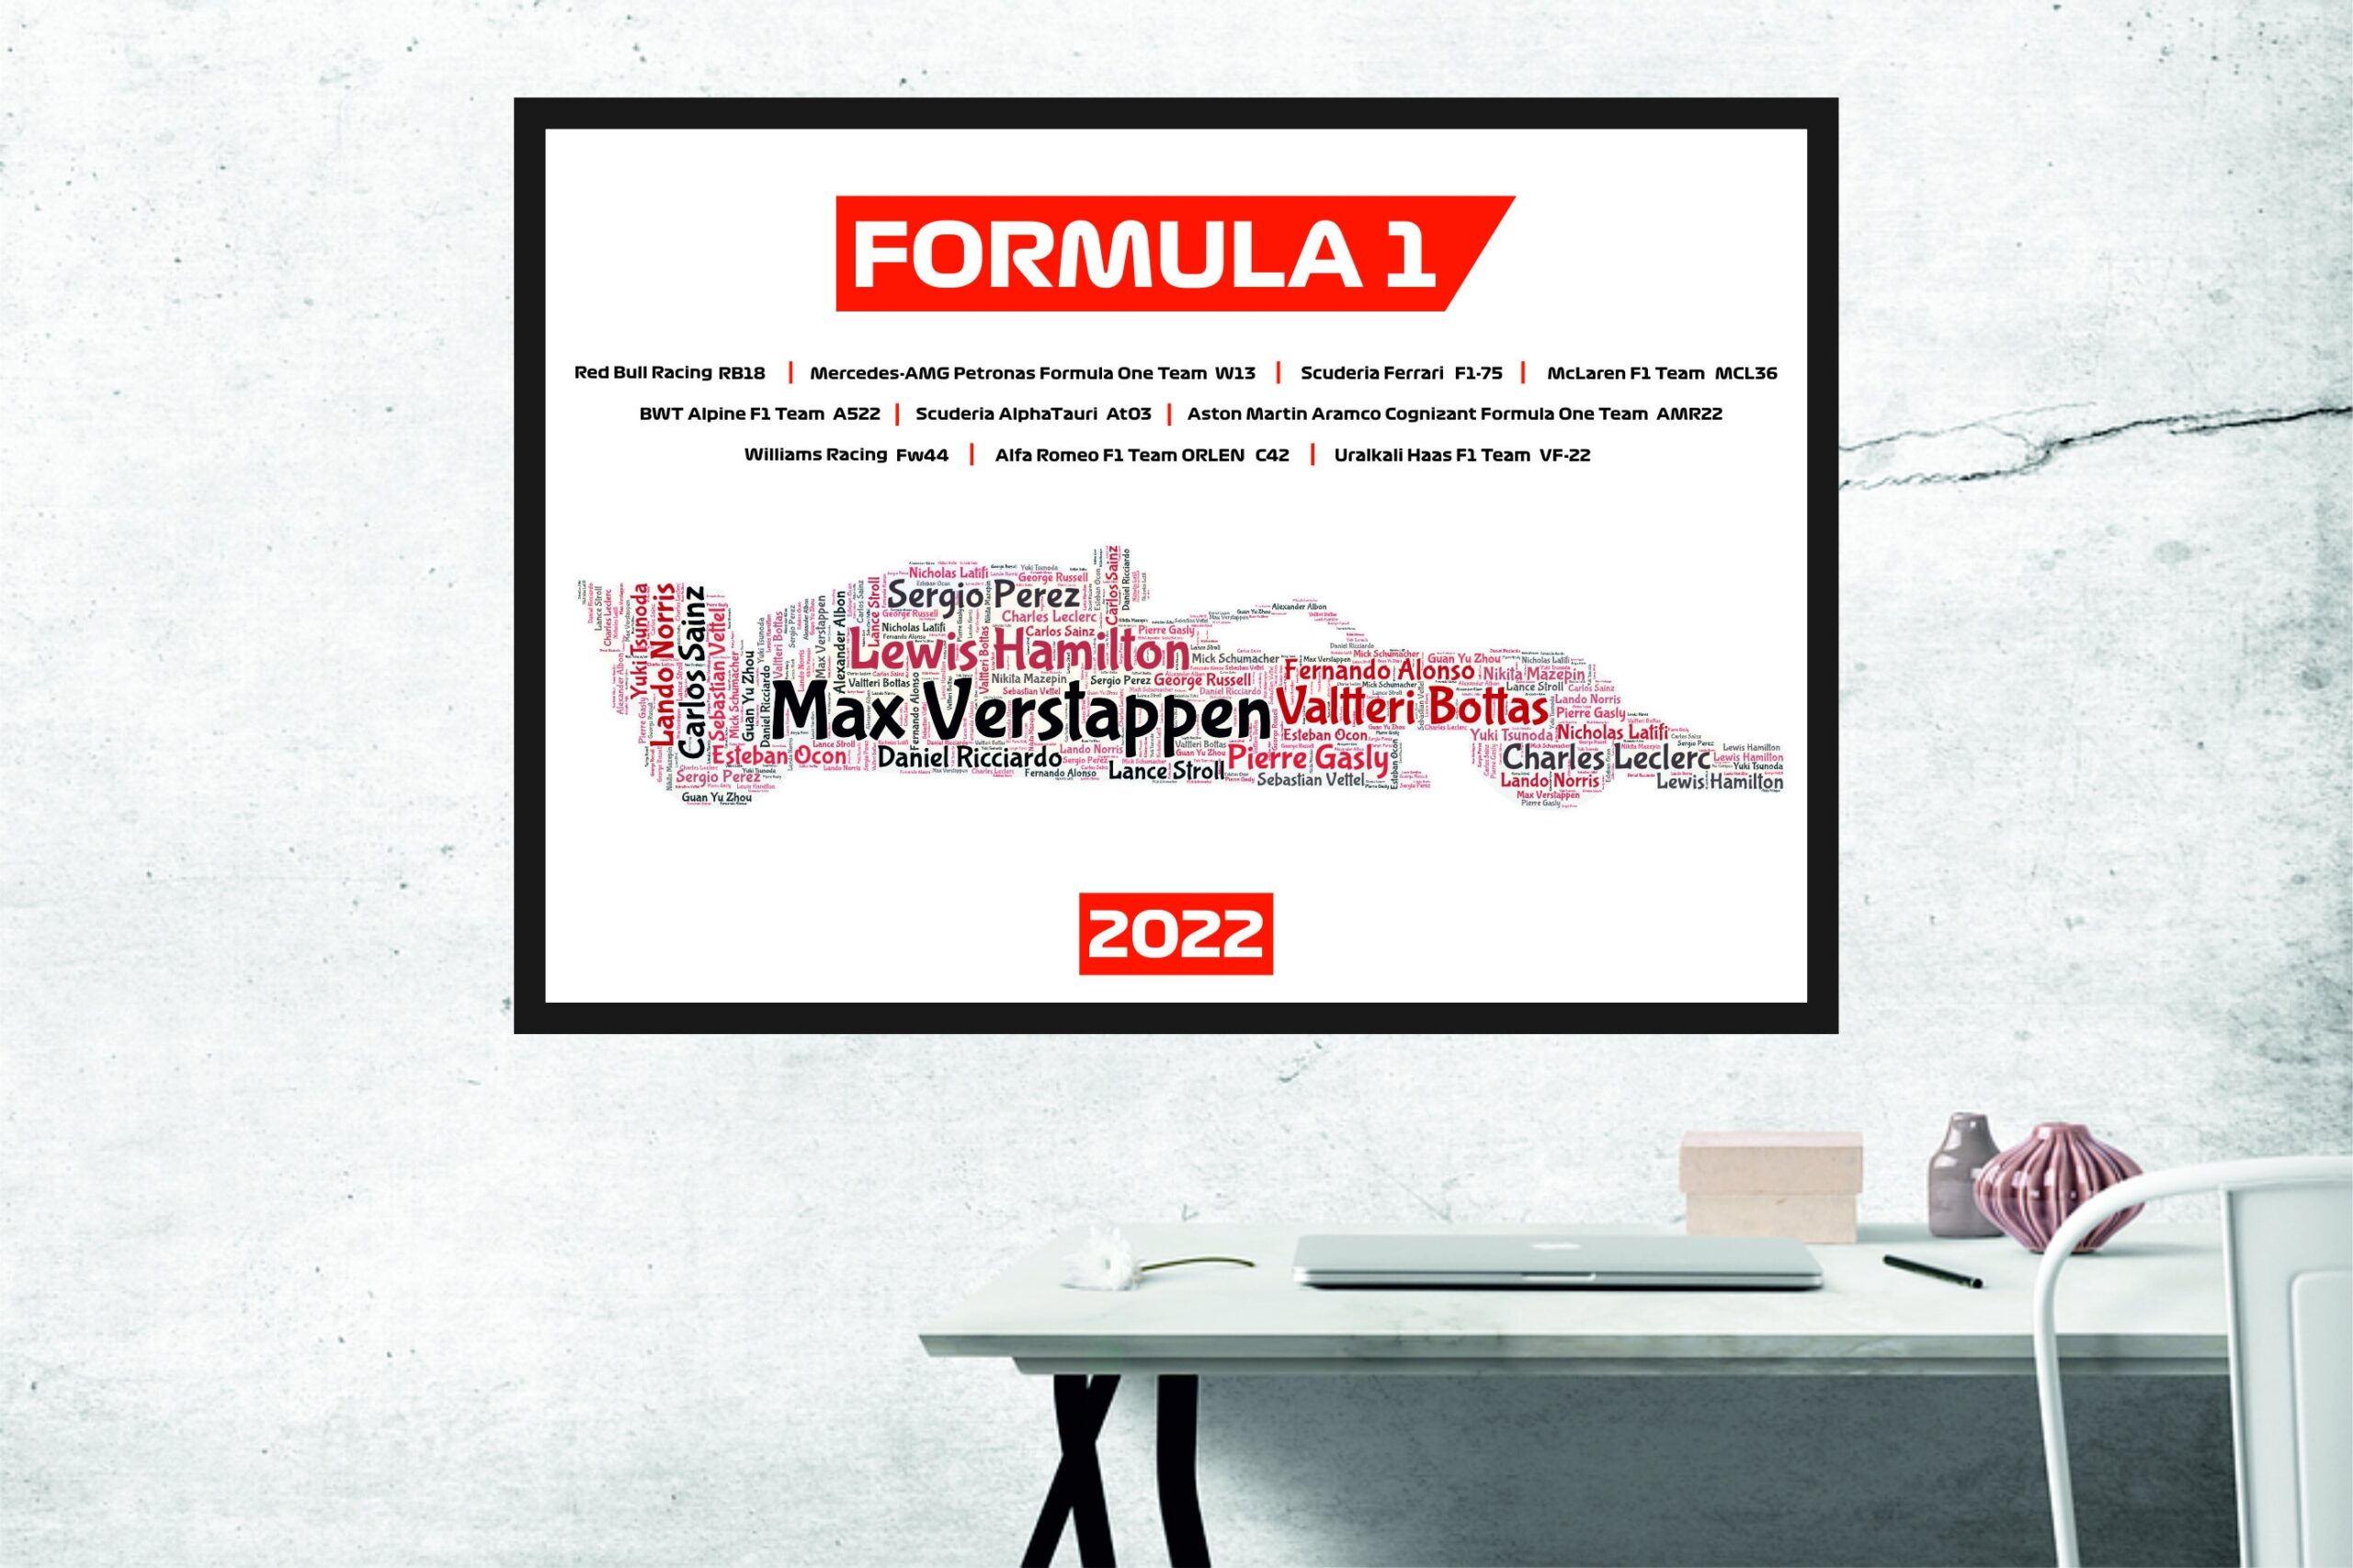 Formula 1 Drivers And Teams Poster